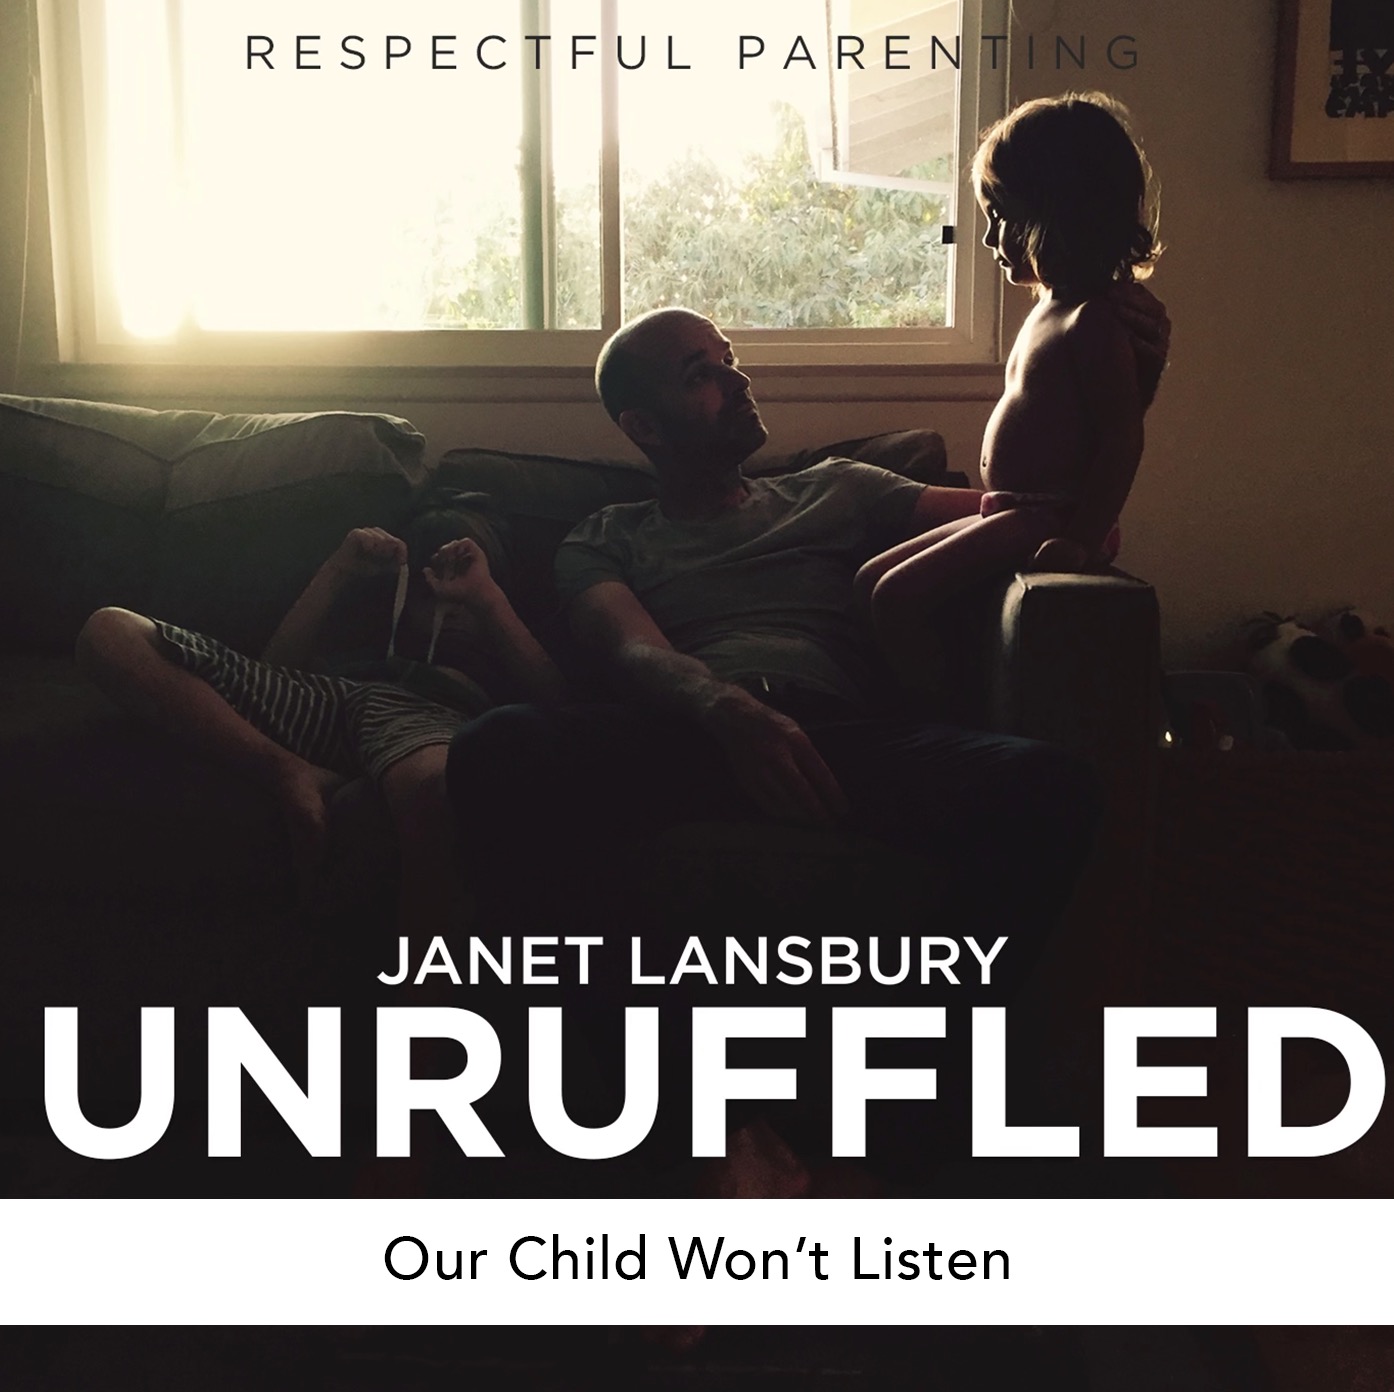 Our Child Won’t Listen – Janet Lansbury